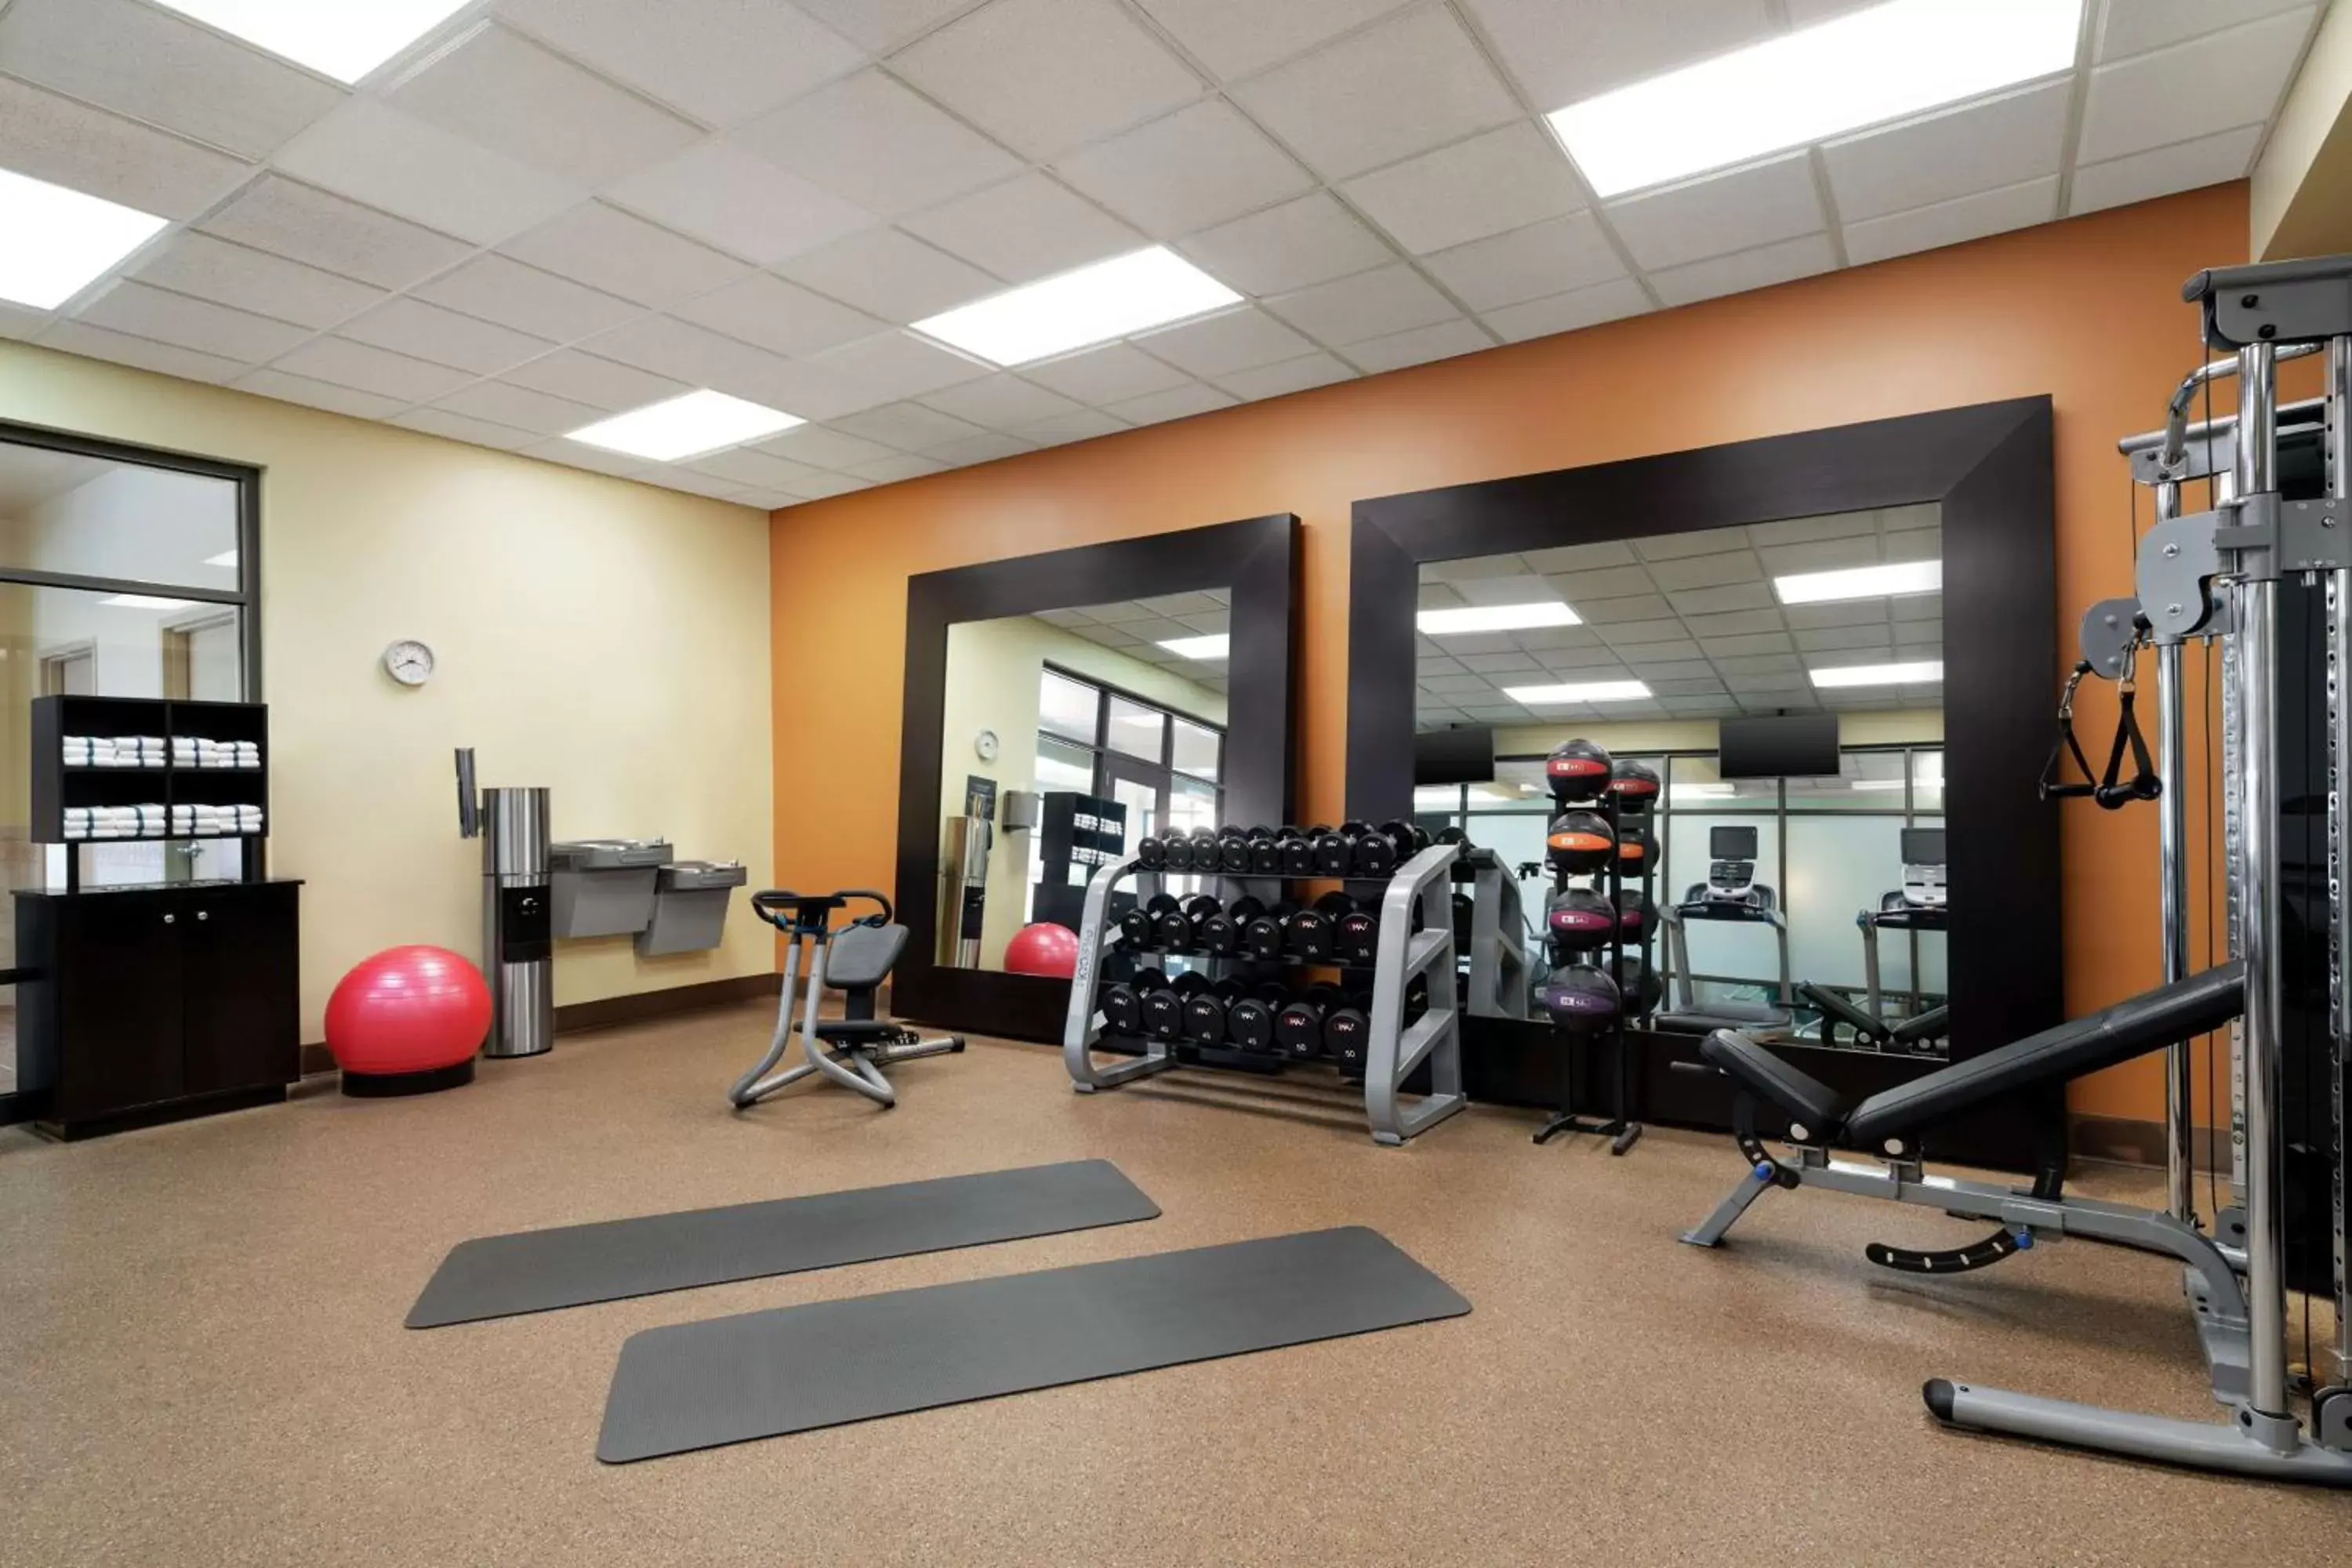 Fitness centre/facilities, Fitness Center/Facilities in Hilton Garden Inn Charlotte/Ayrsley